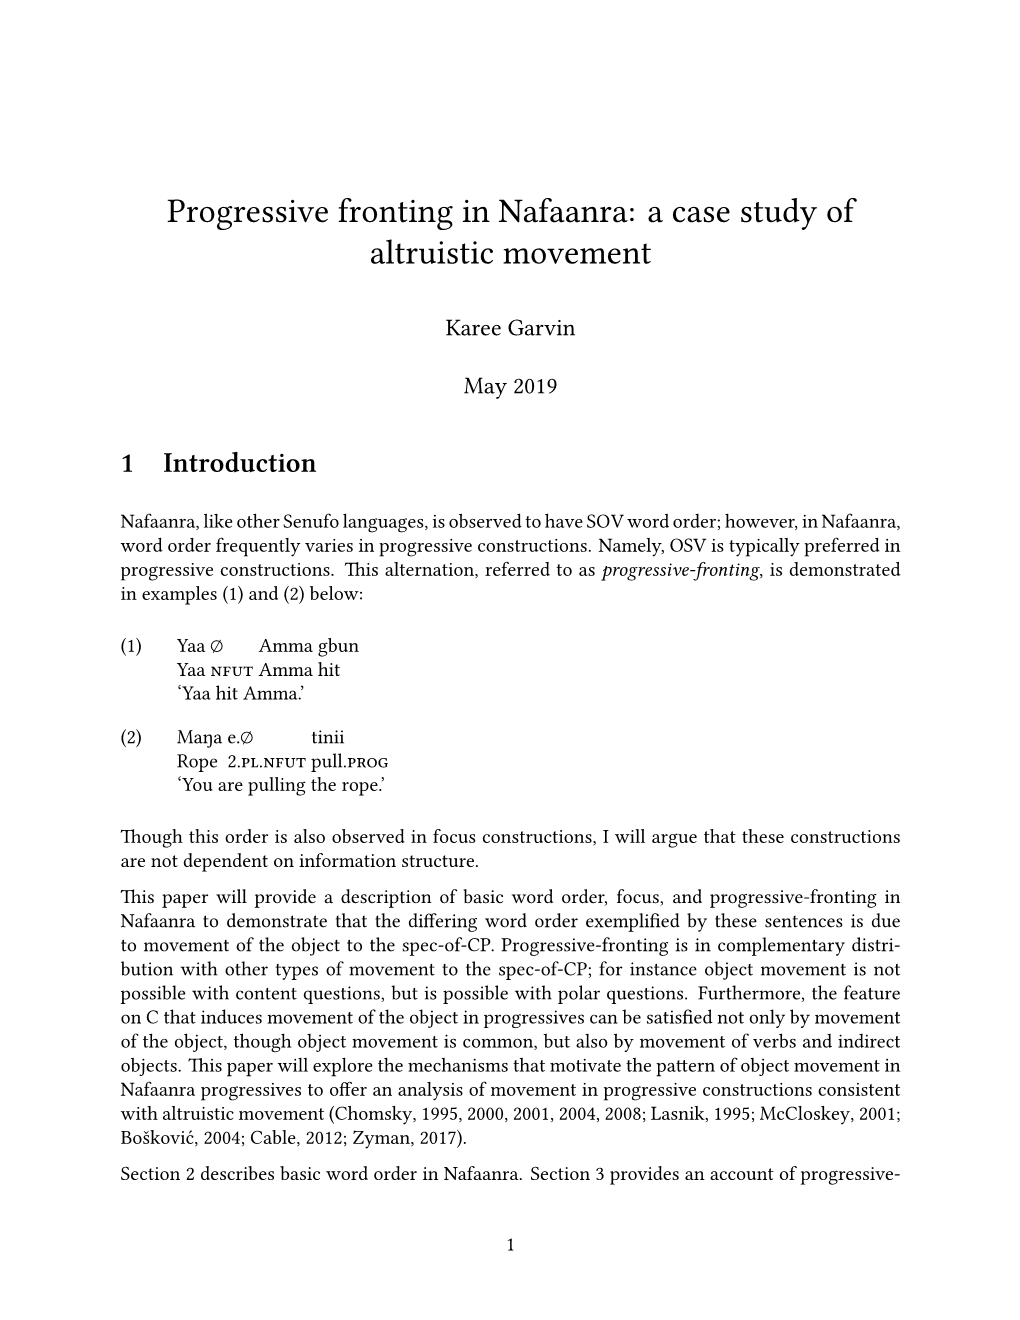 Progressive Fronting in Nafaanra: a Case Study of Altruistic Movement